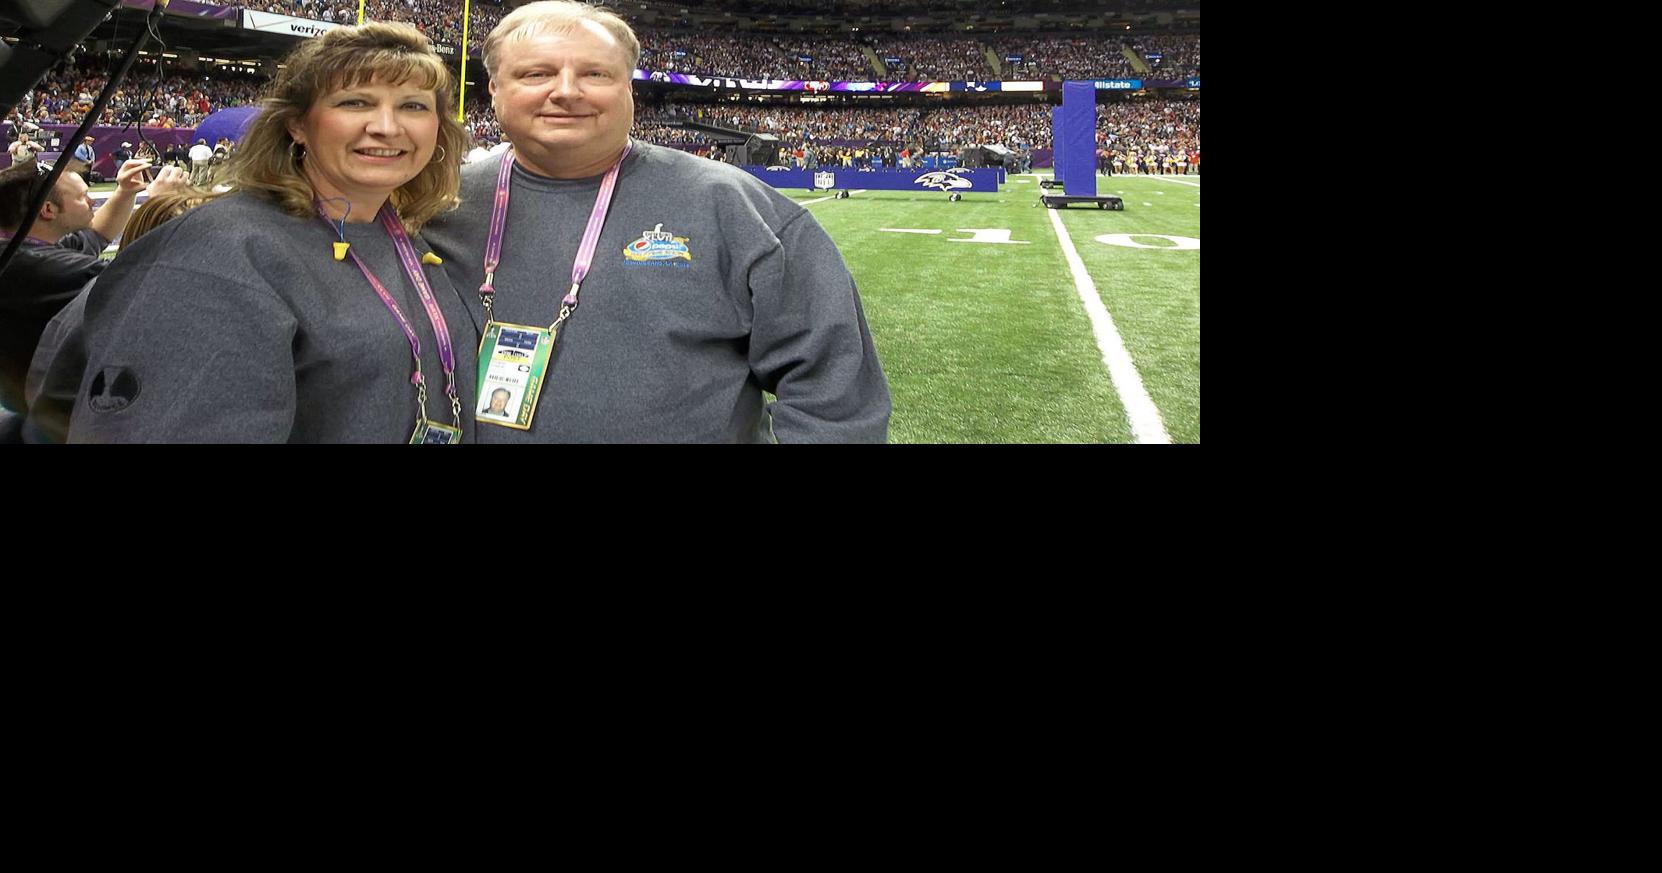 Indiana man has front row seat as Super Bowl volunteer